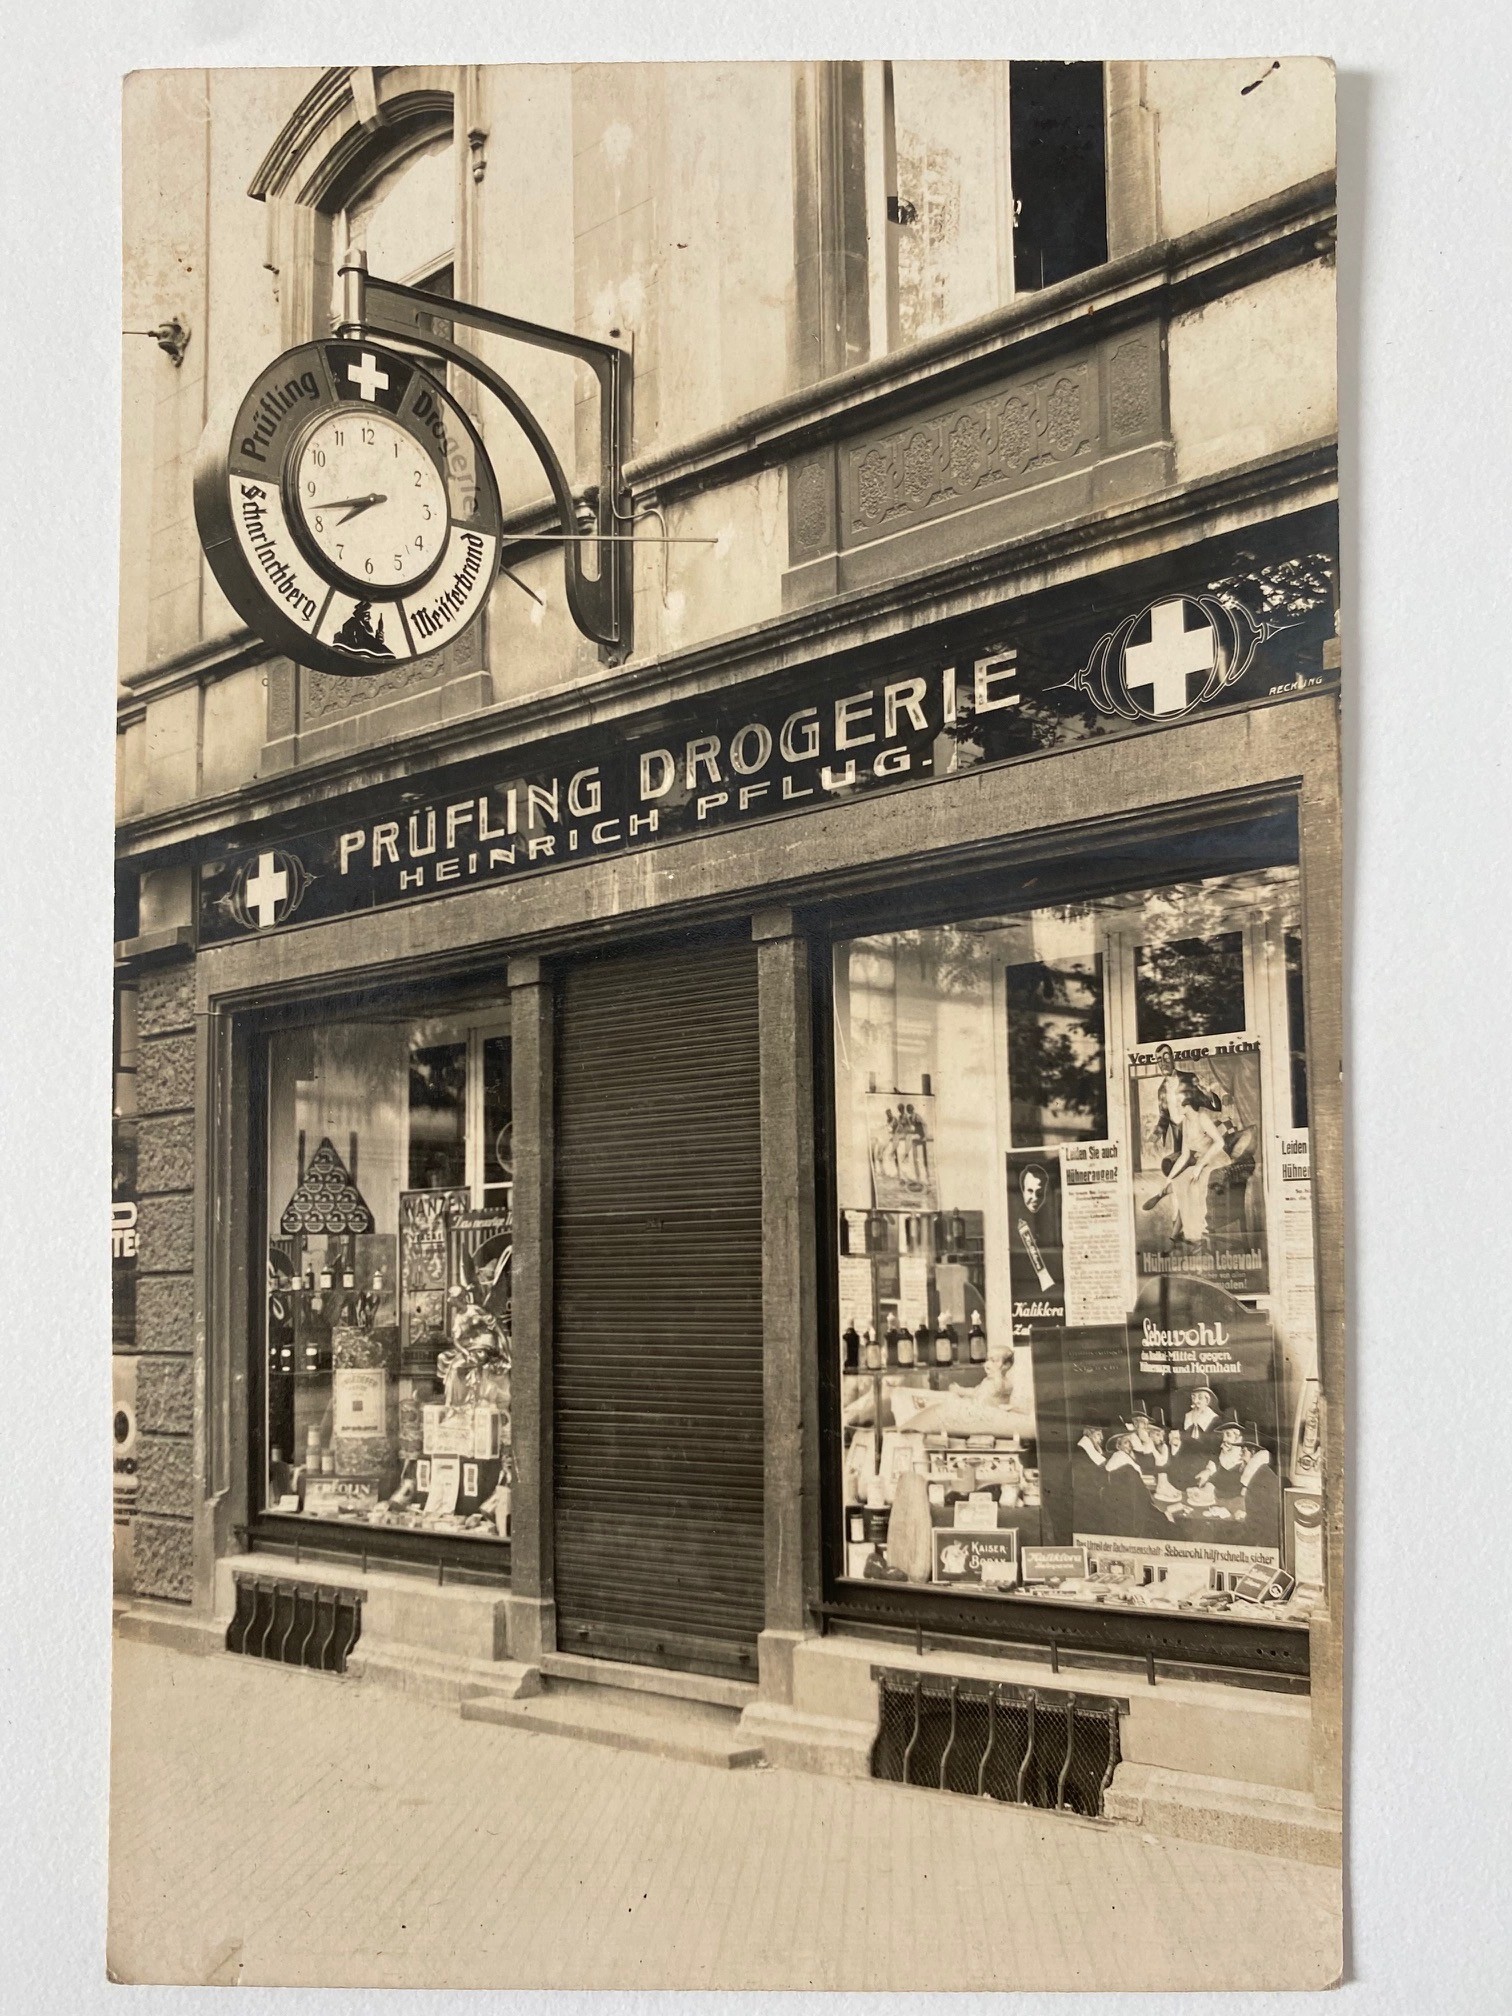 Ladenfront der Prüfling-Drogerie Heinrich Pflug, Frankfurt am Main, um 1930 (Regionalgeschichtliche Sammlung Dr. Stefan Naas CC BY-NC-SA)